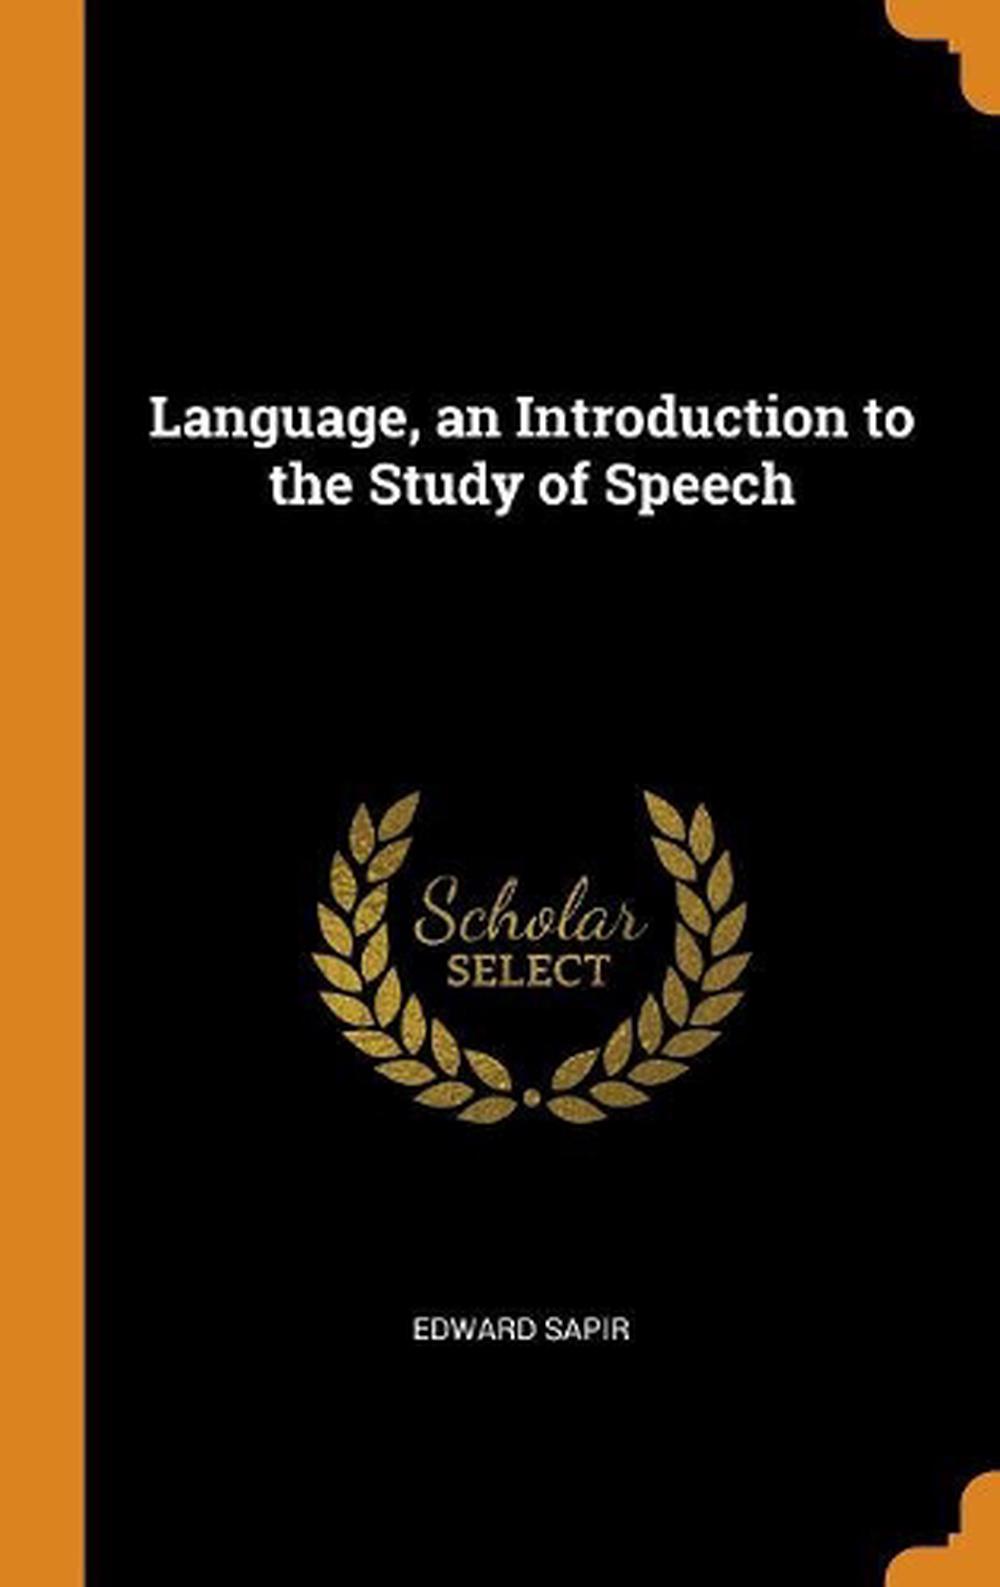 edward sapir language an introduction to the study of speech